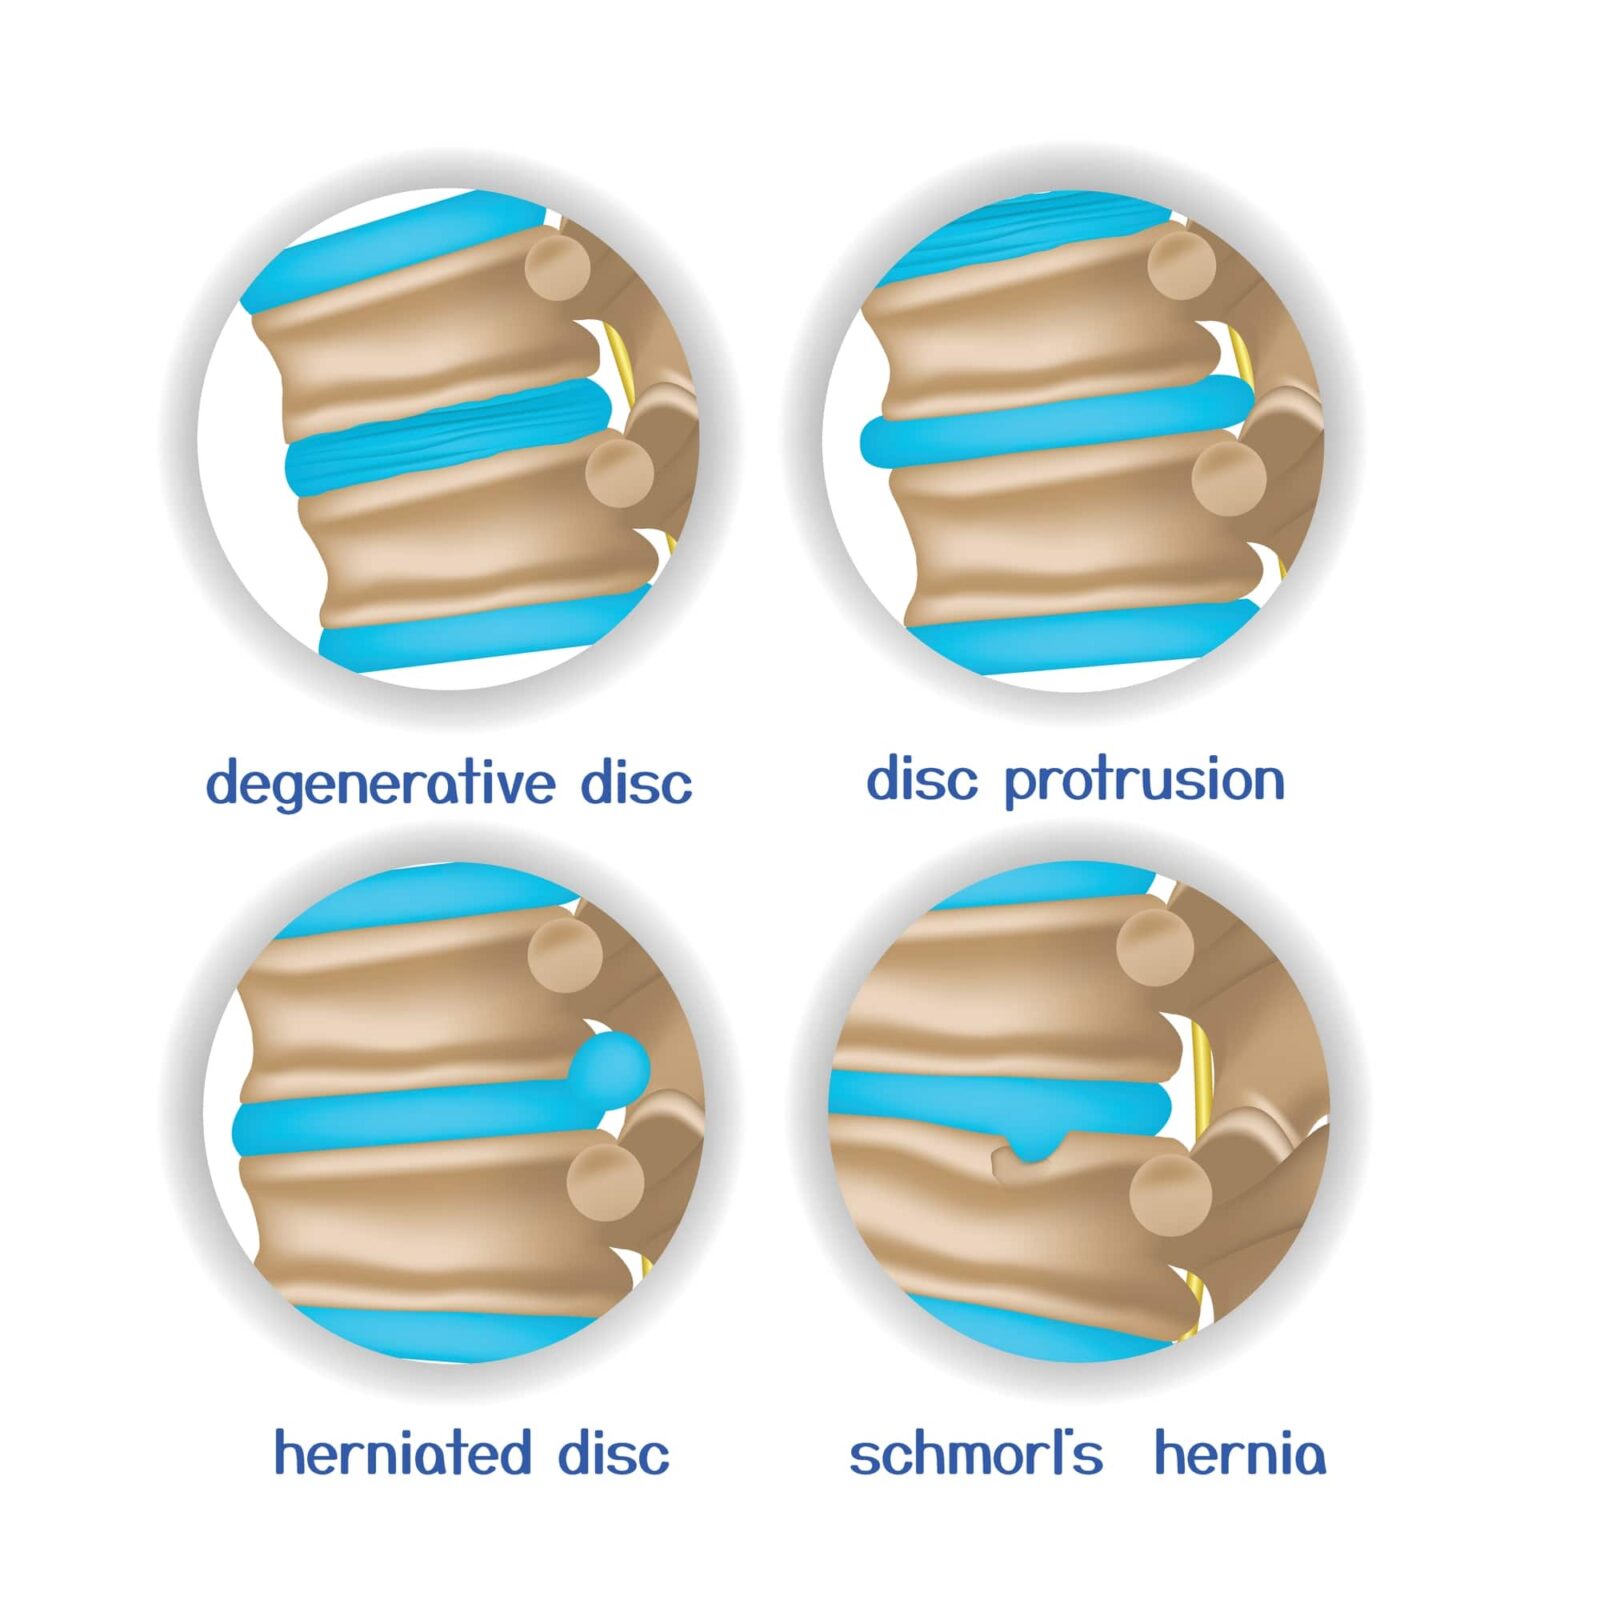 degenerative disc, disc protrusion, herniated disc, schmorl's hernia